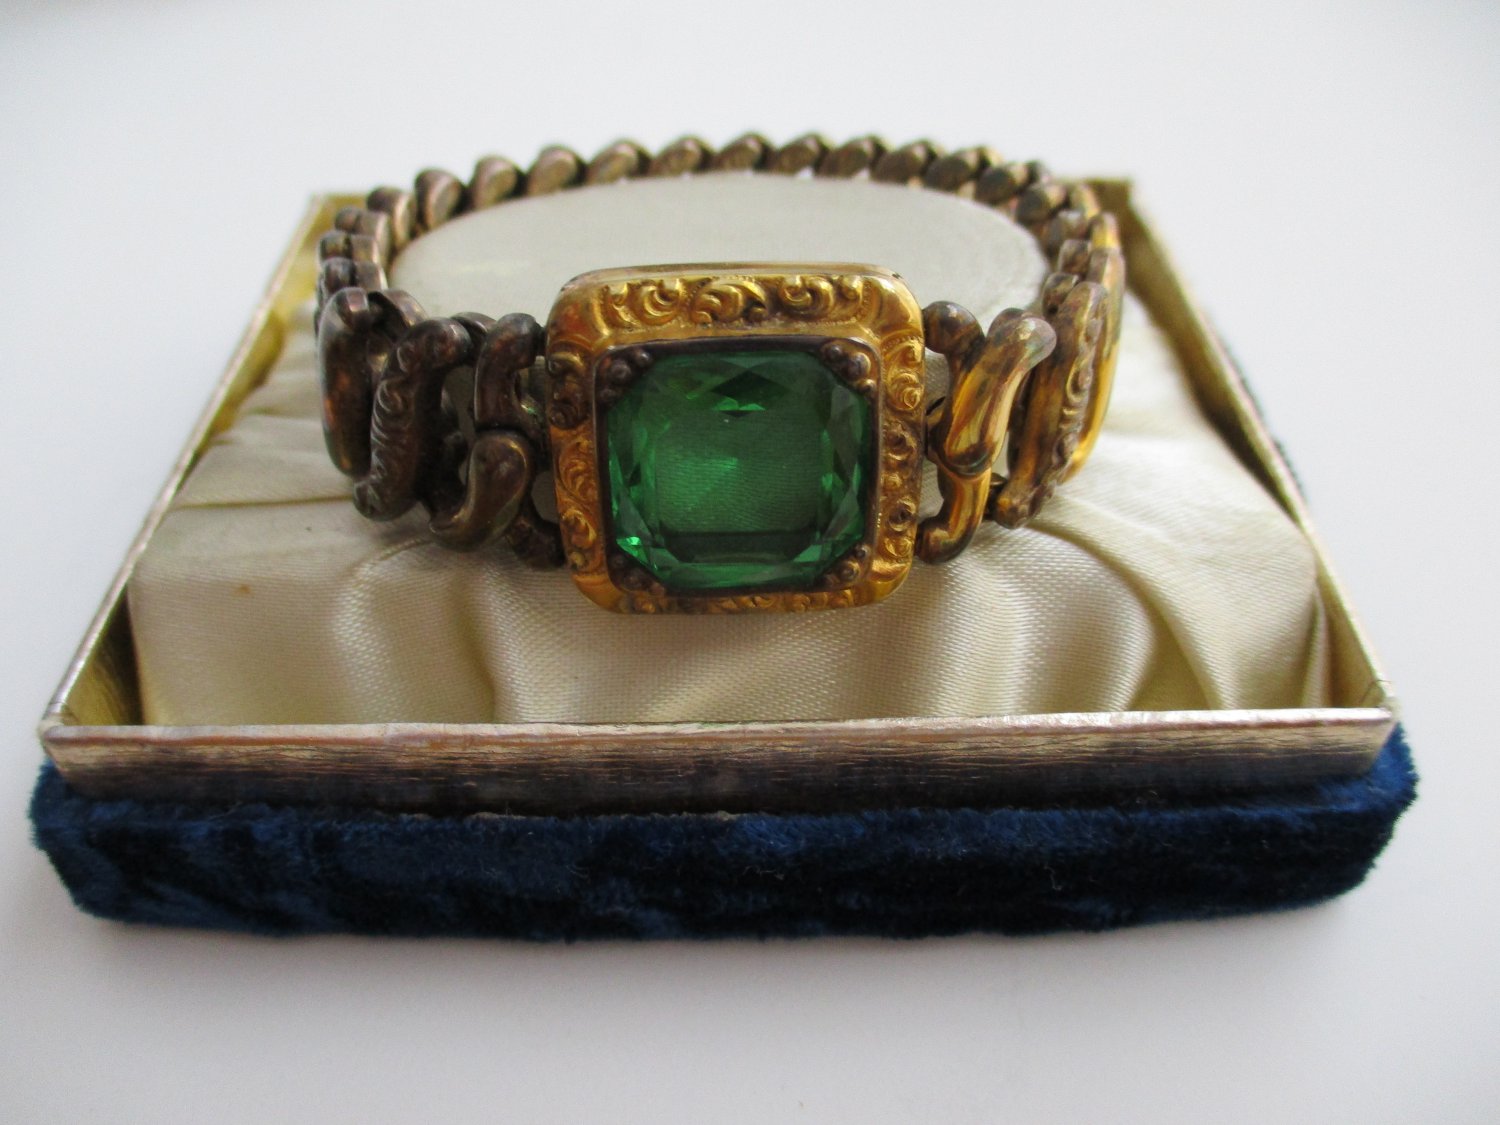 Vintage Pitman & Keeler American Queen Sweetheart Expansion Bracelet Original Box